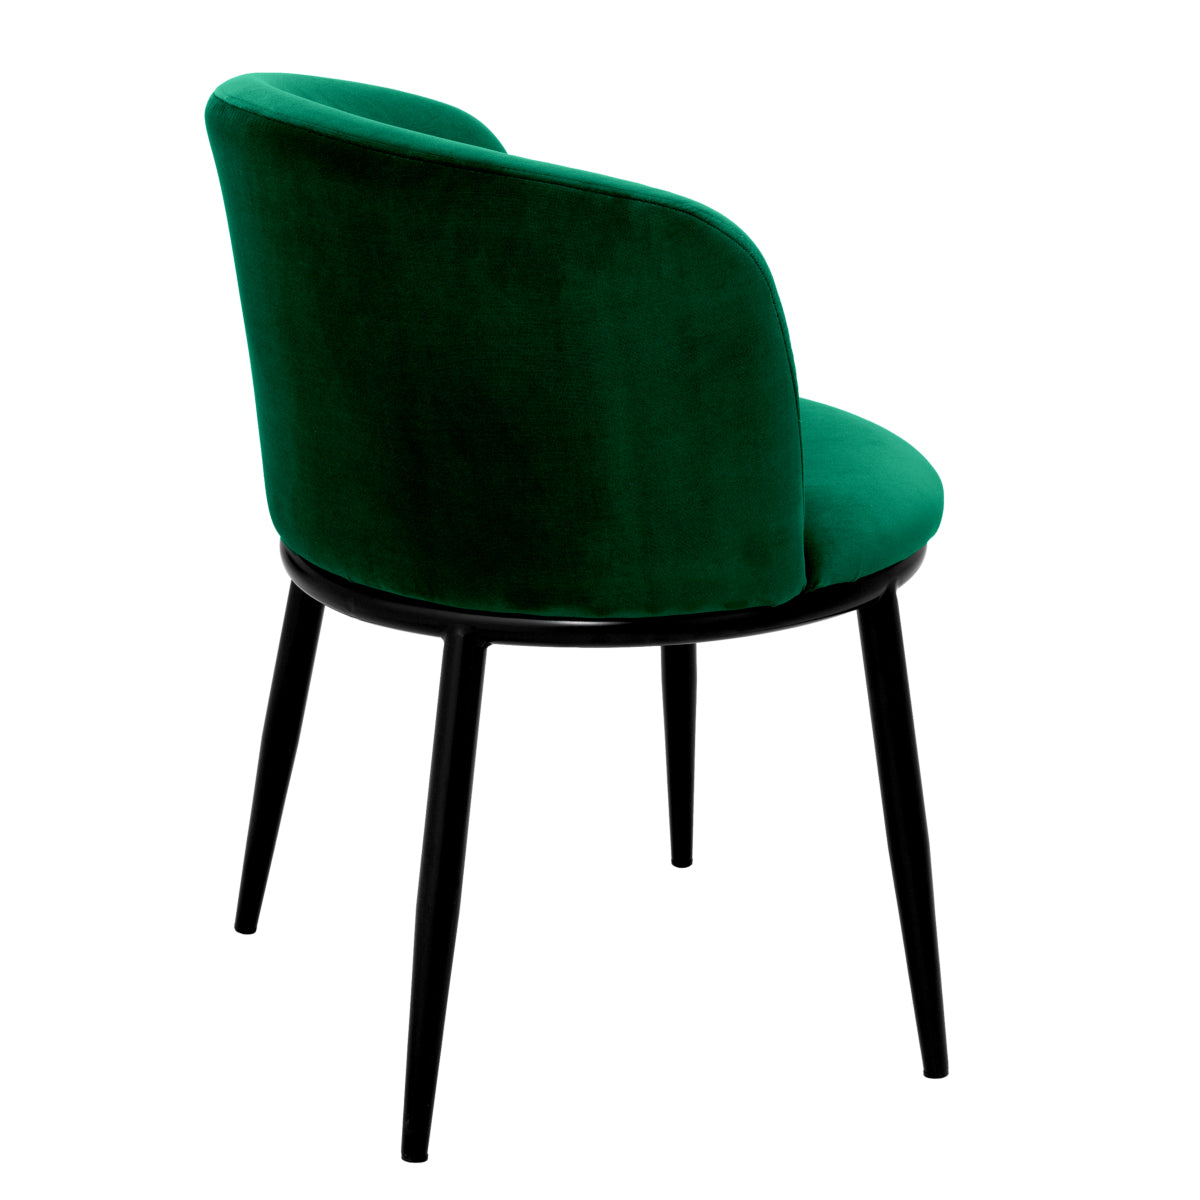 Dining chair Eichholtz Filmore cameron green